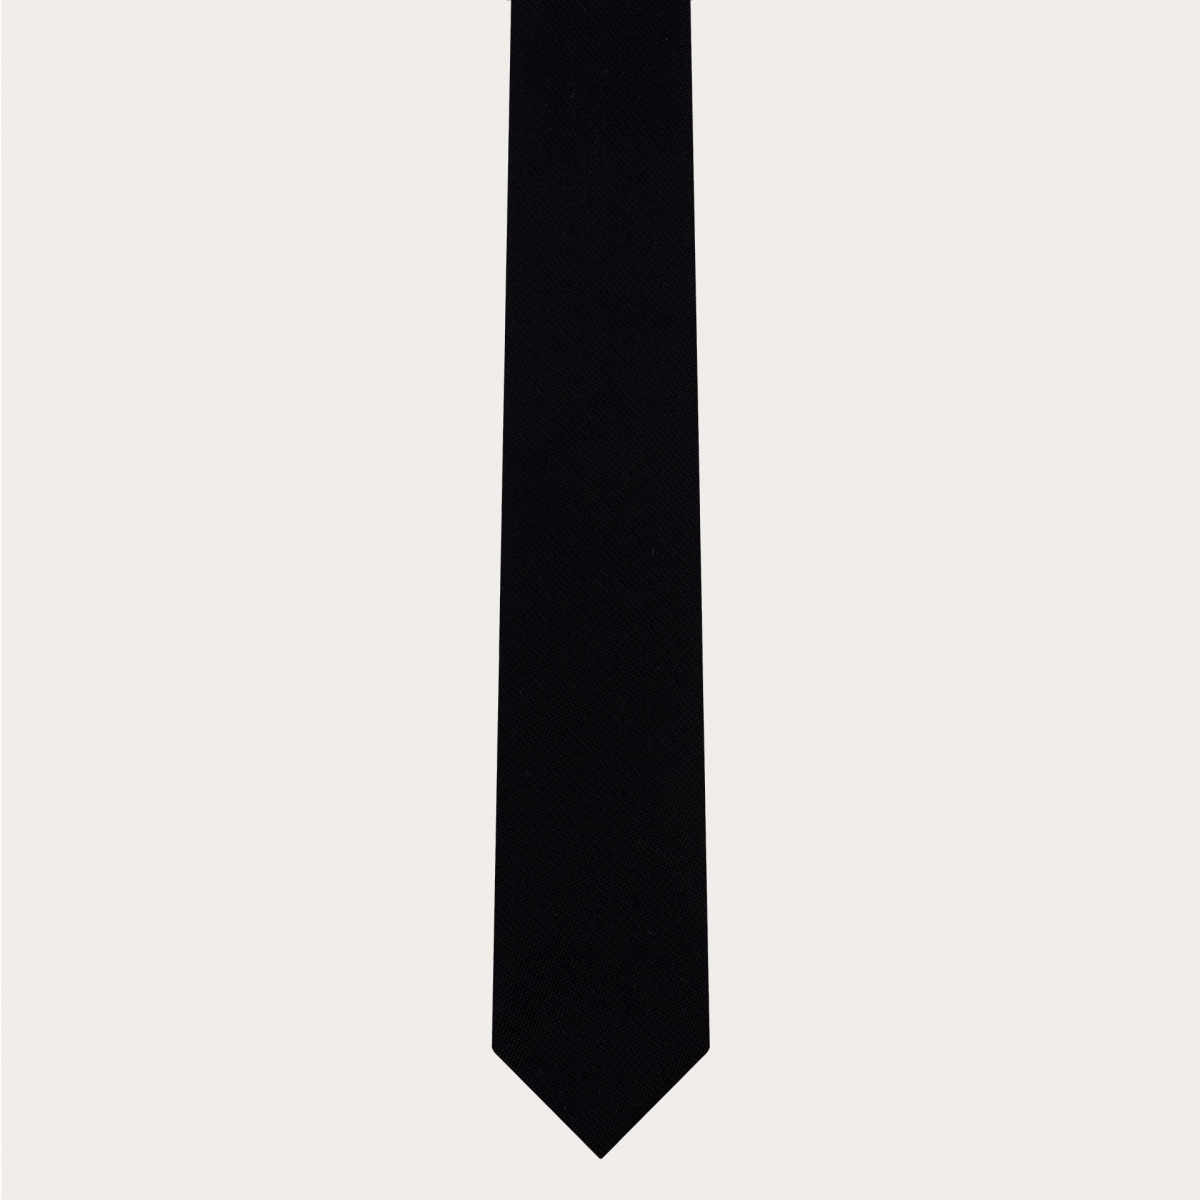 Corbata negra fina: elegancia y estilo en cada detalle